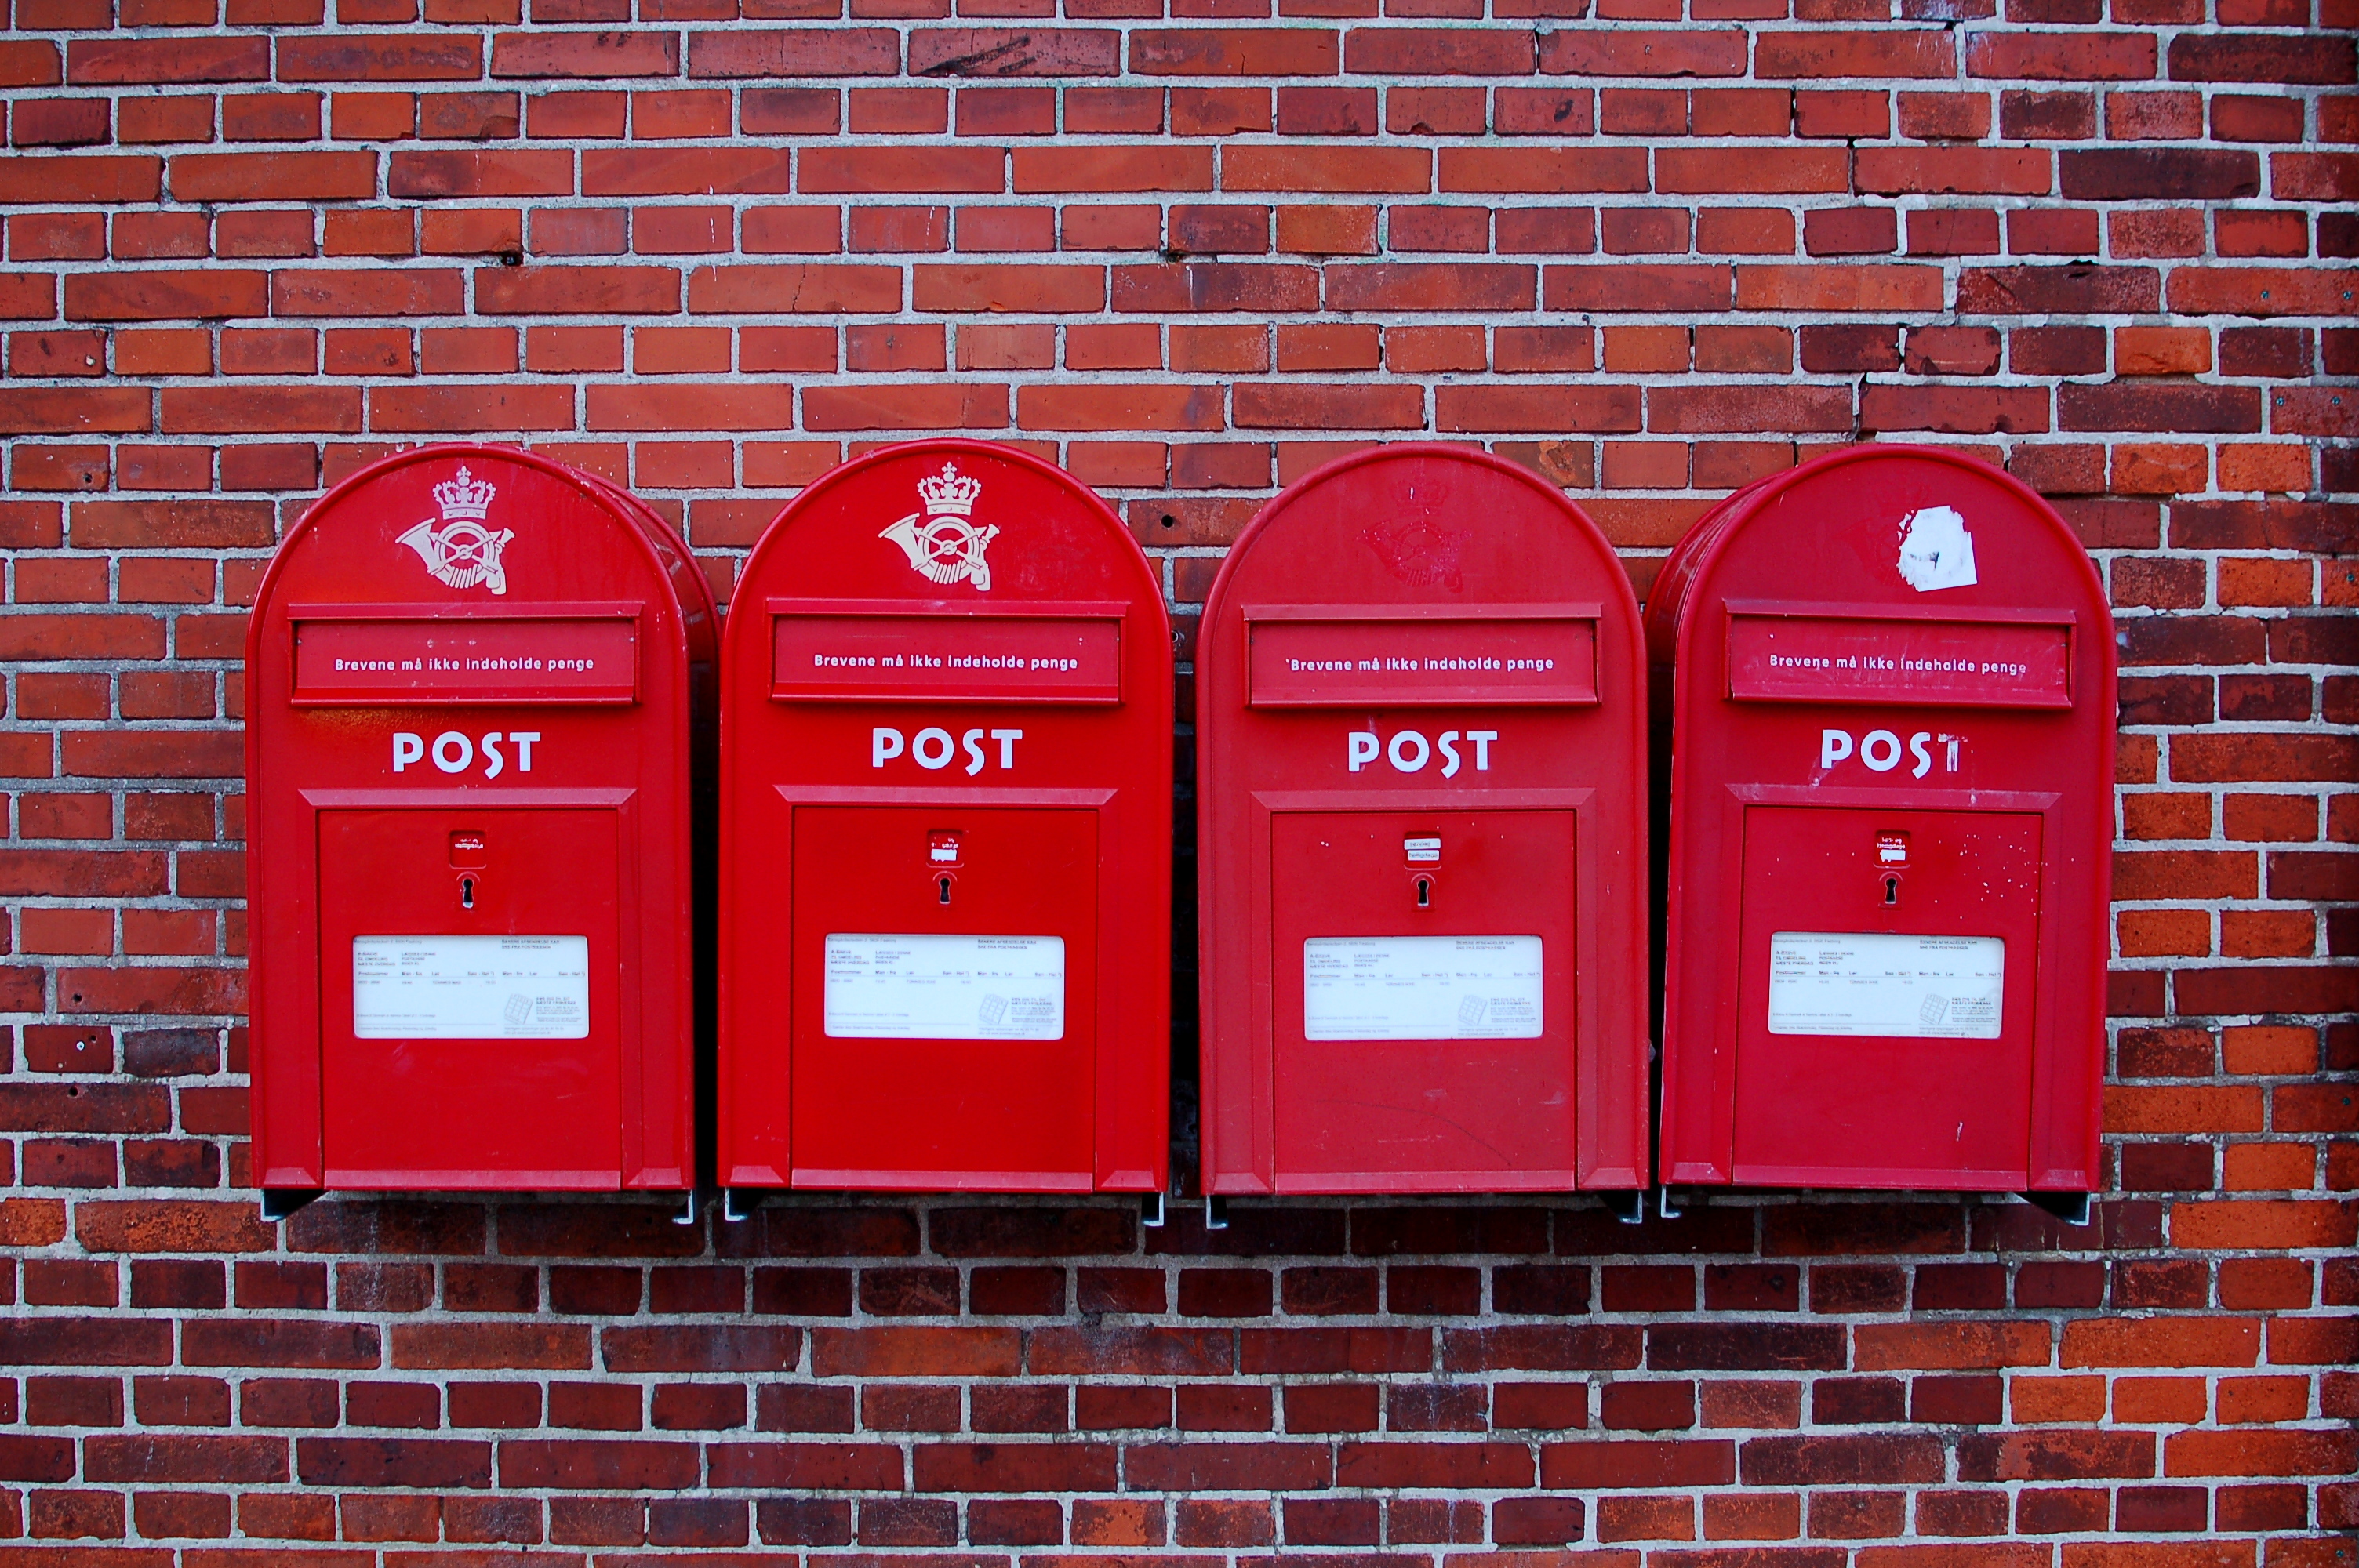 Post_Danmark_Post_boxes_in_F%C3%A5borg%2C_Denmark.jpg